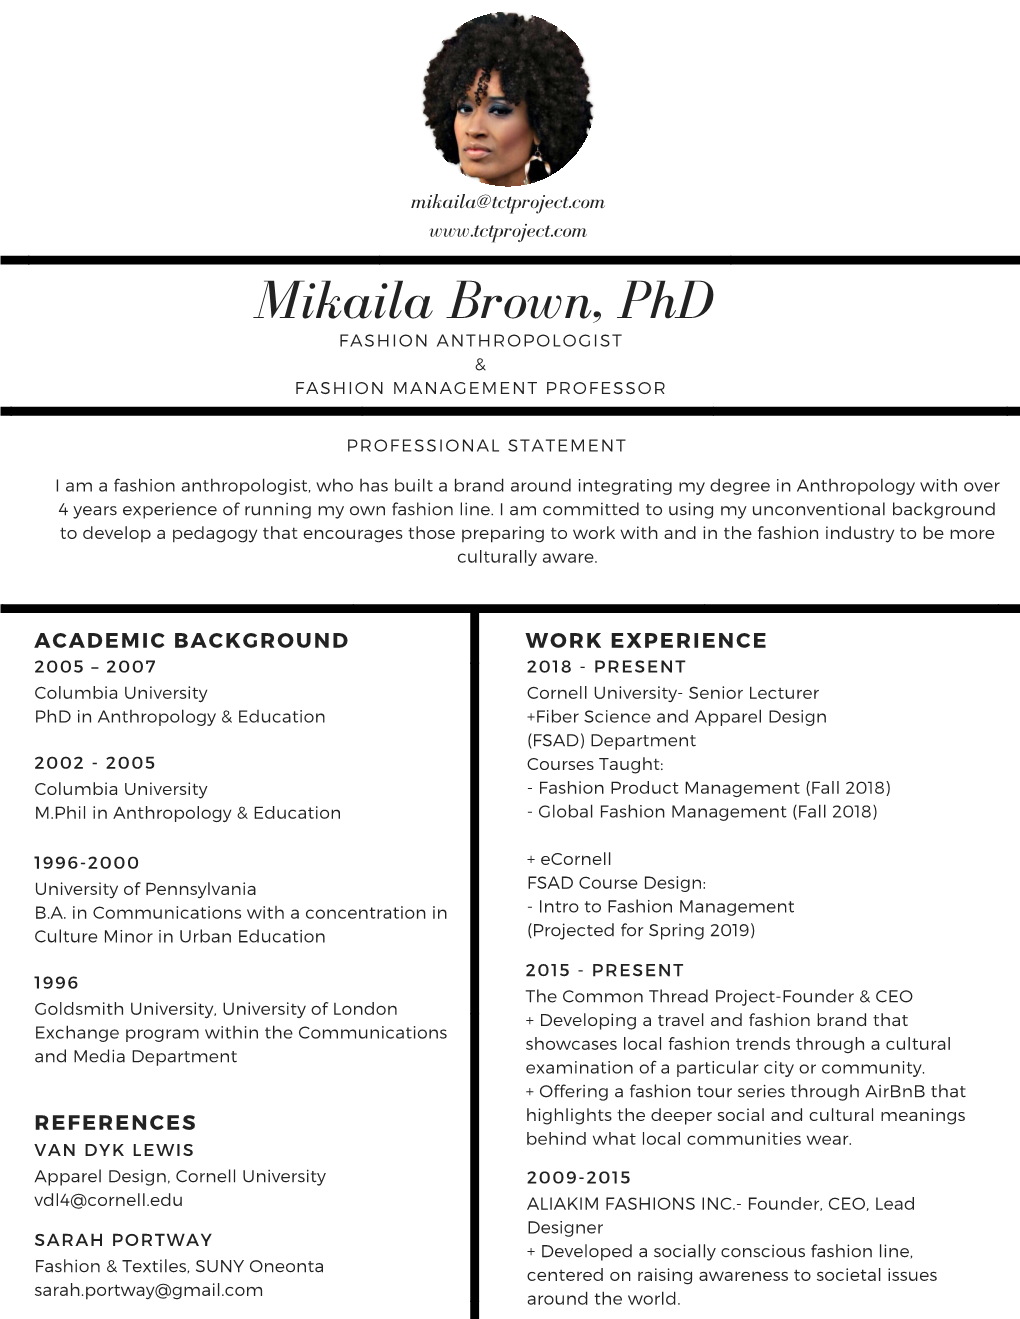 Mikaila Brown, Phd FASHION ANTHROPOLOGIST & FASHION MANAGEMENT PROFESSOR